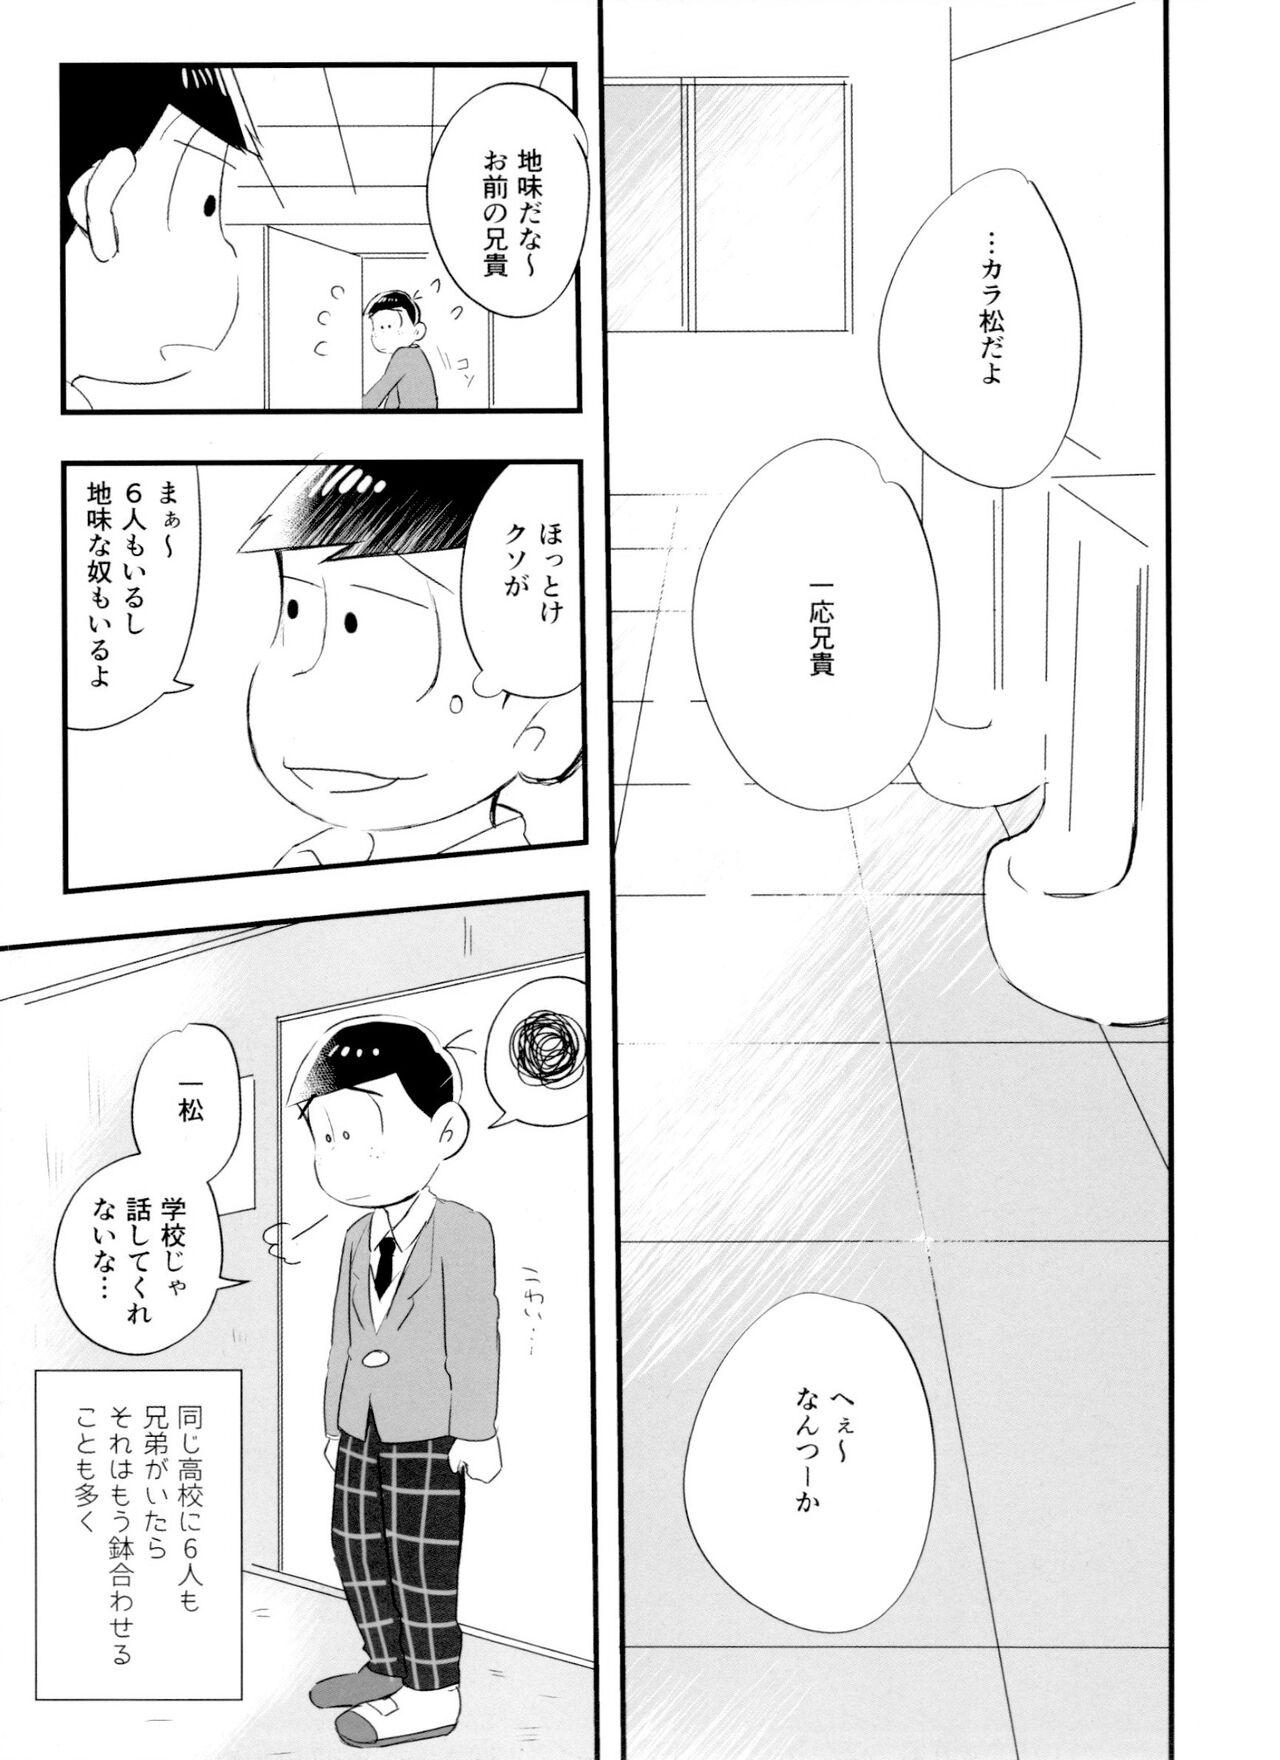 Instagram koi fūru shohō-yaku - Osomatsu san Licking Pussy - Page 7